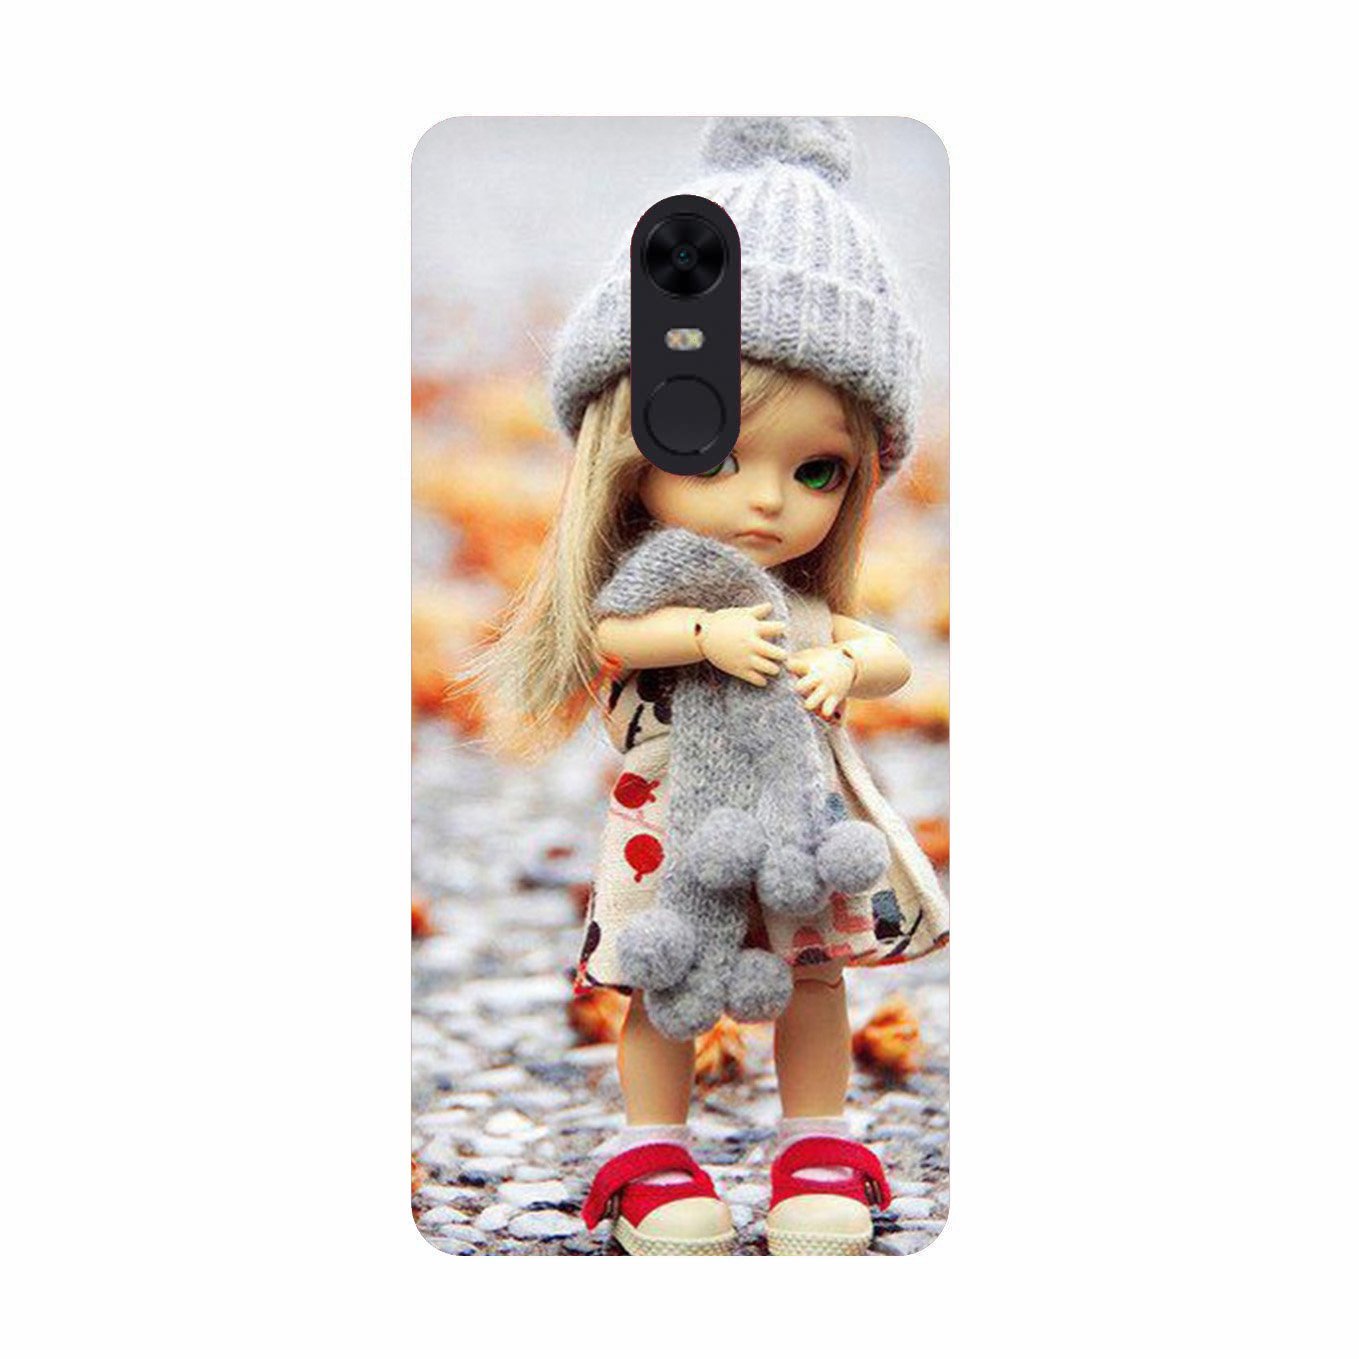 Cute Doll Case for Redmi 5